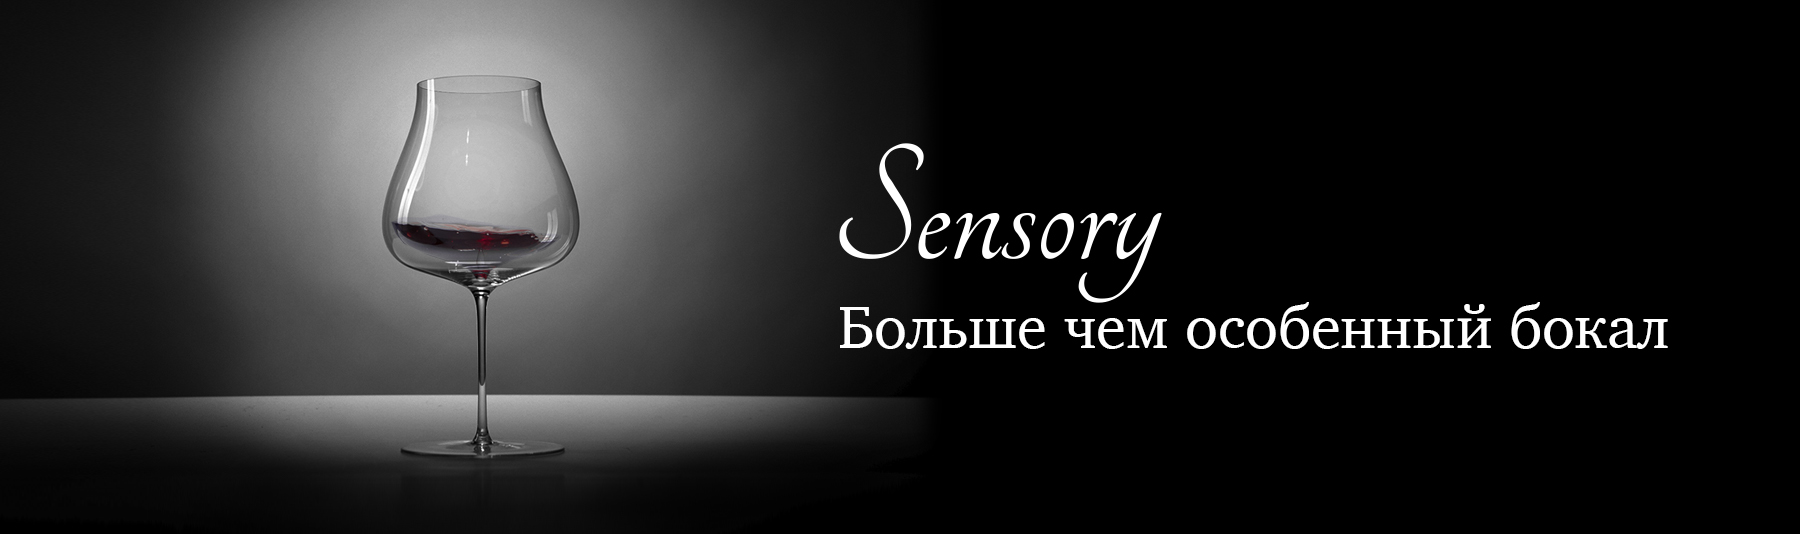 Sensory